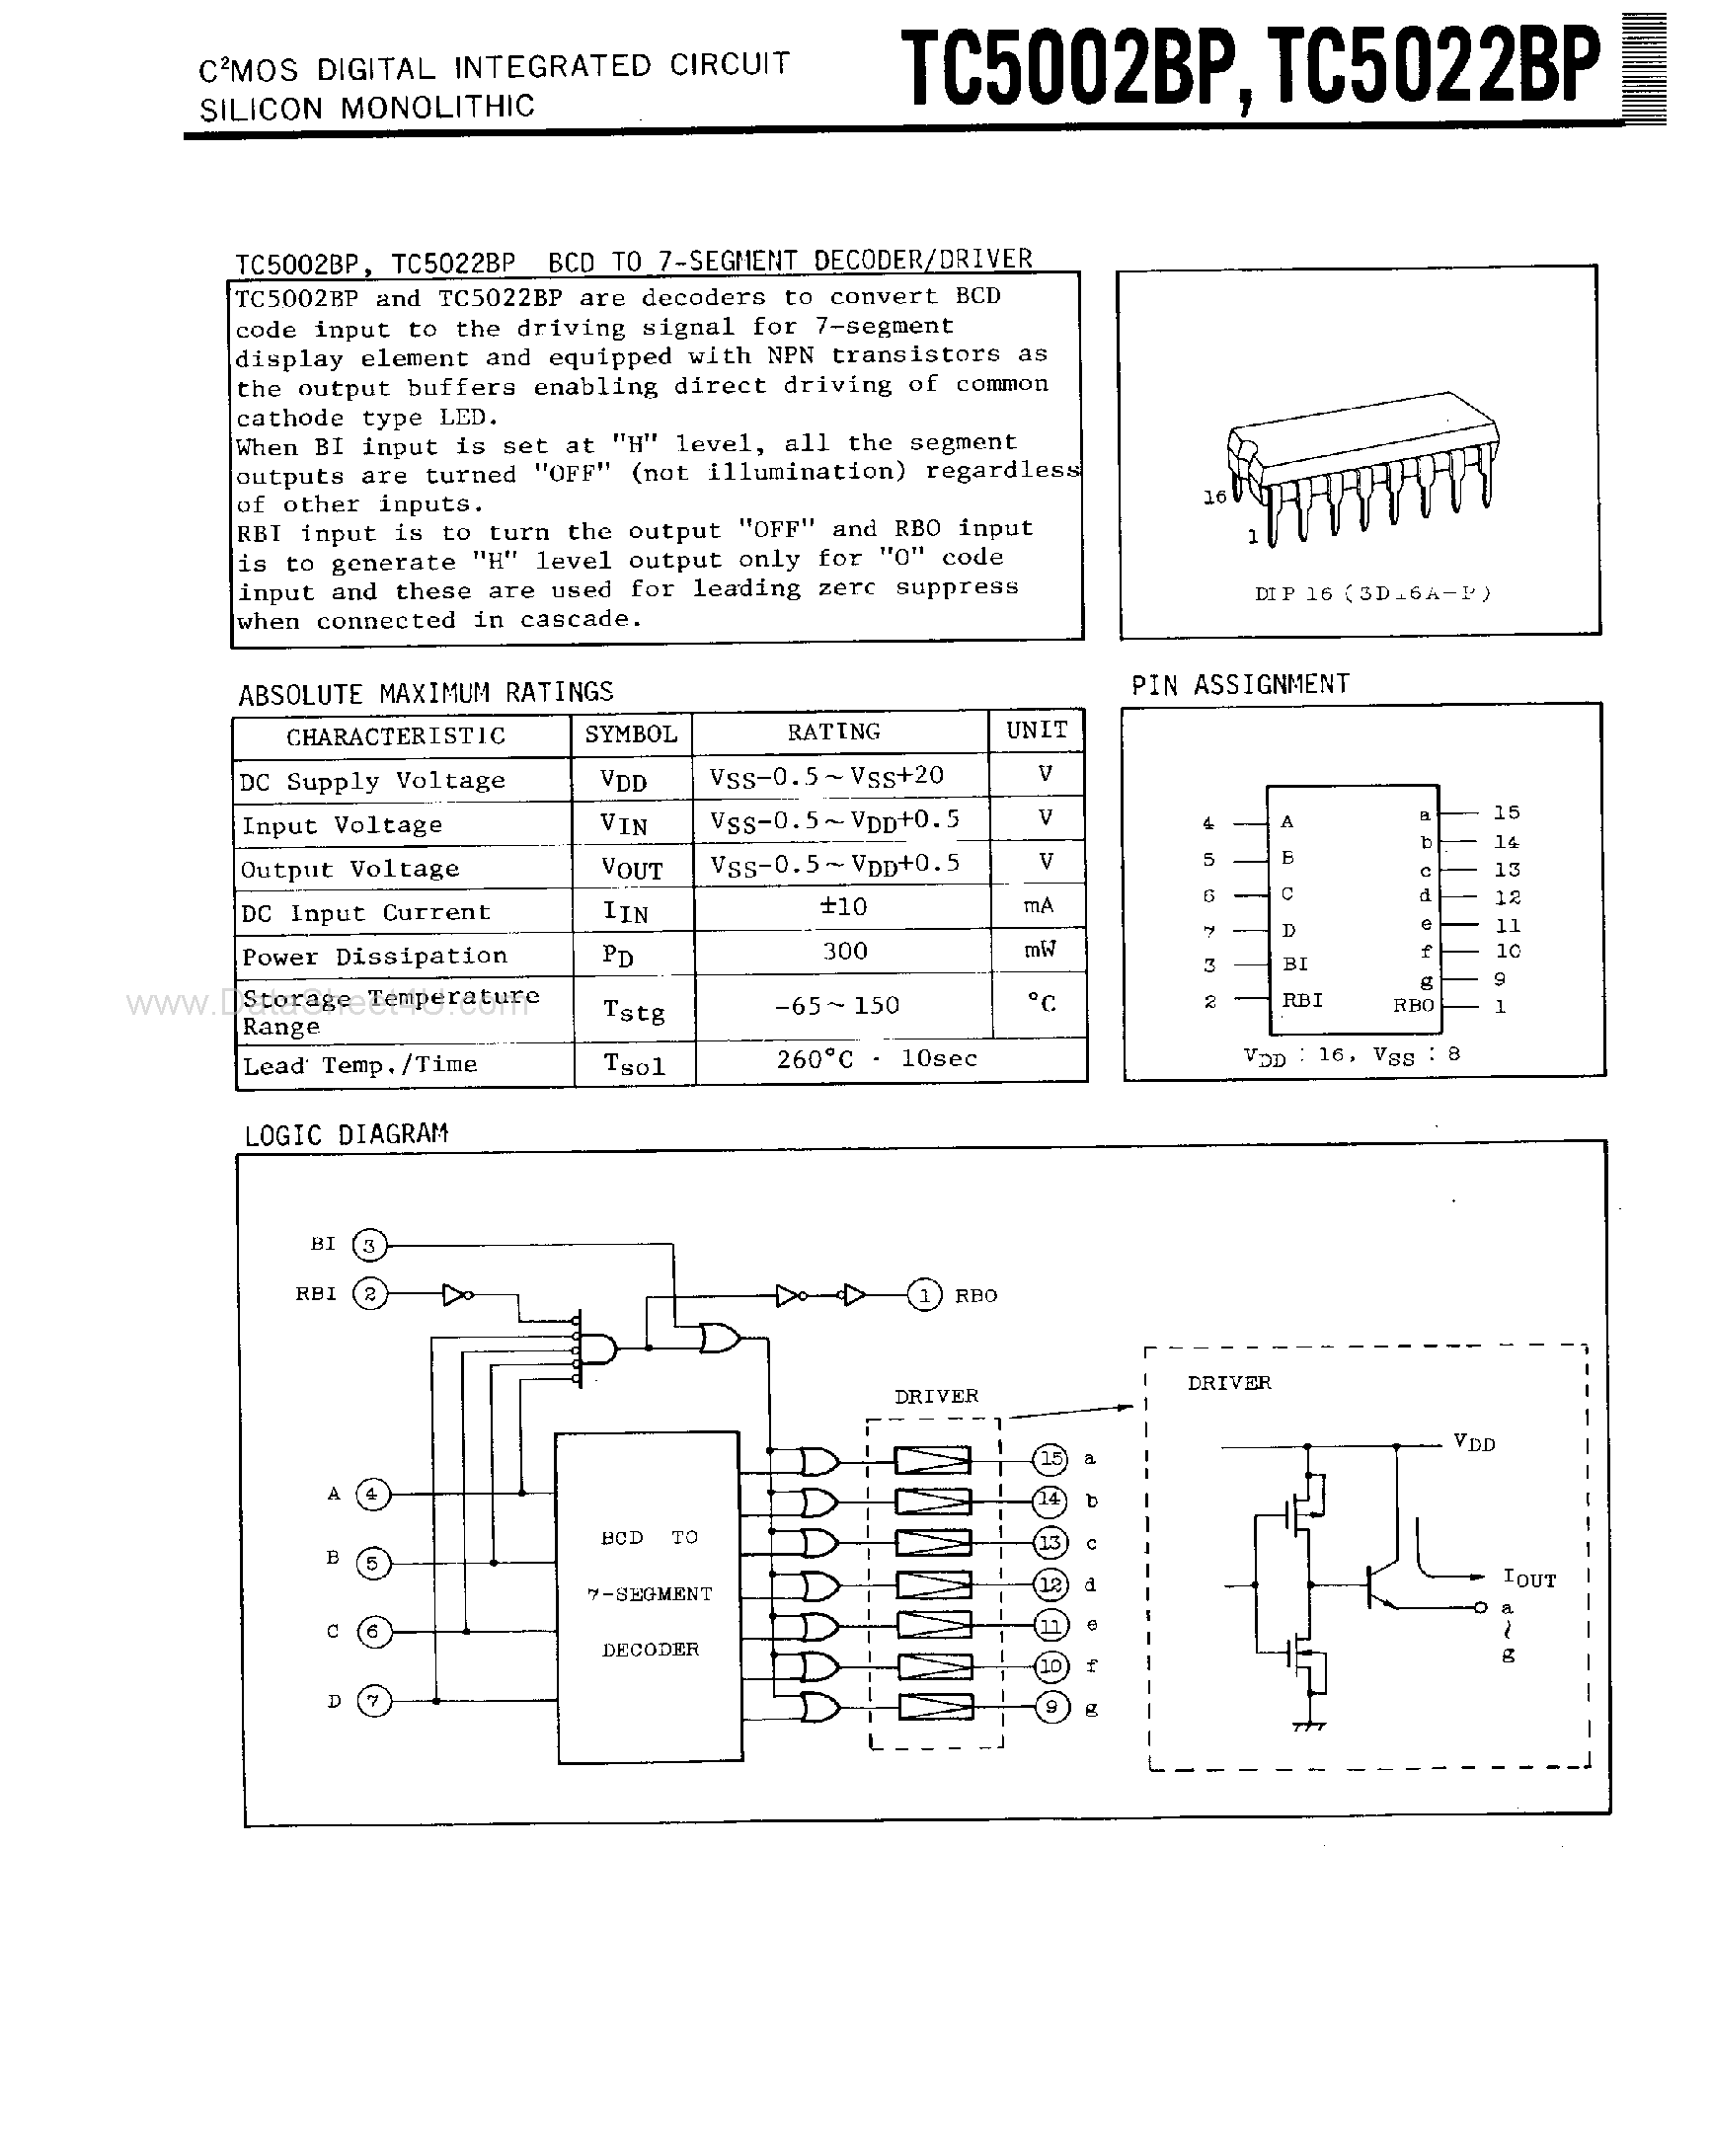 Datasheet TC5002BP - (TC5002BP / TC5022BP) C2MOS DIGITAL INTEGRATED CIRCUIT SILICON MONOLITHIC page 1